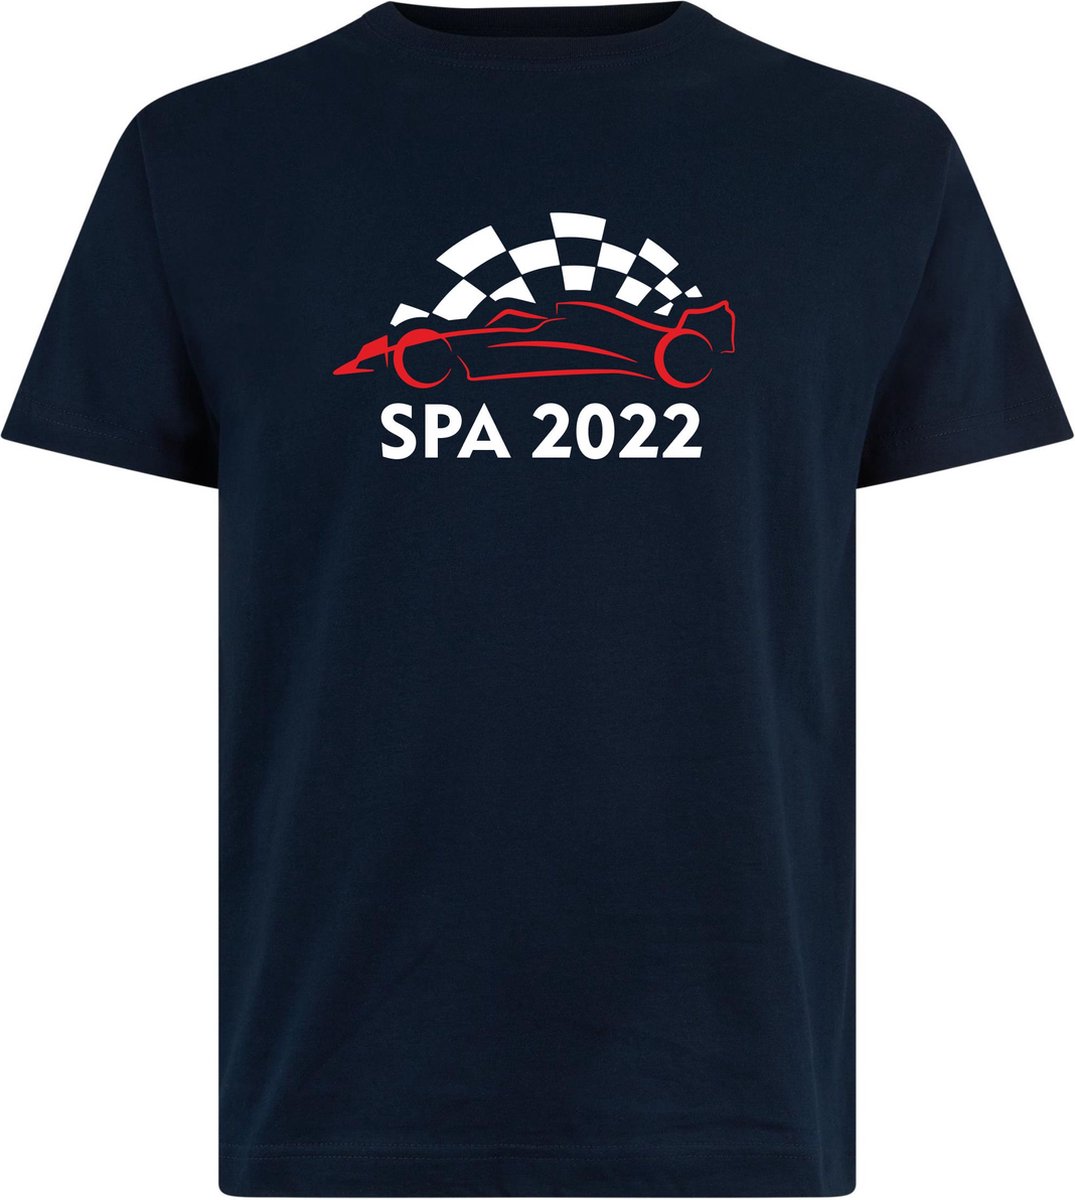 T-shirt kinderen Spa 2022 met raceauto | Max Verstappen / Red Bull Racing / Formule 1 fan | Grand Prix Circuit Spa-Francorchamps | kleding shirt | Navy | maat 68